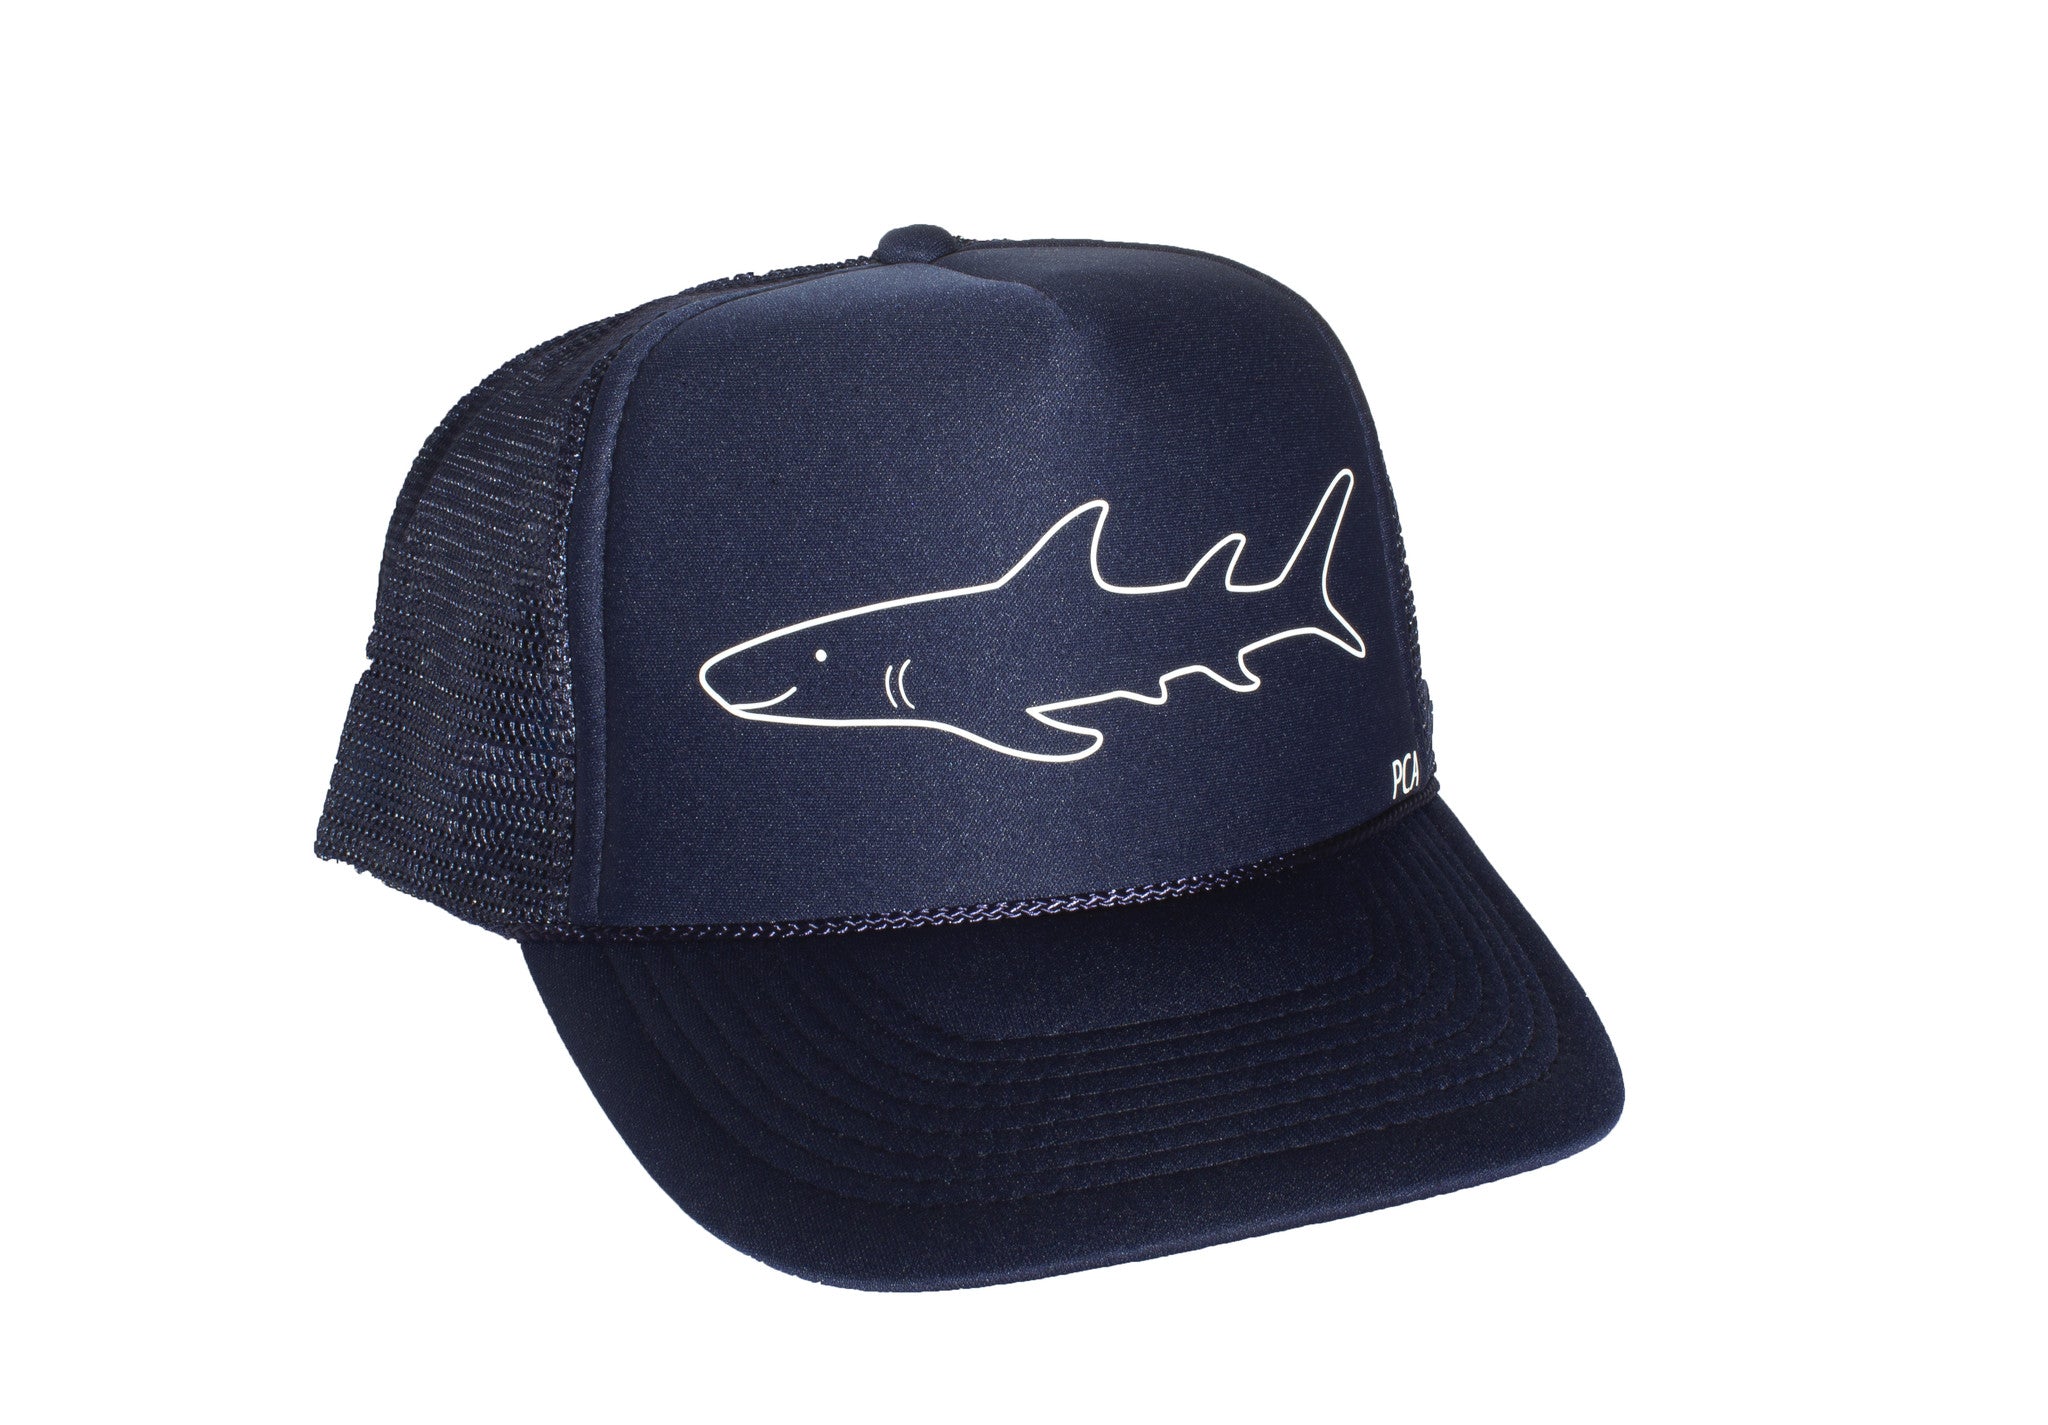 sharks california hat